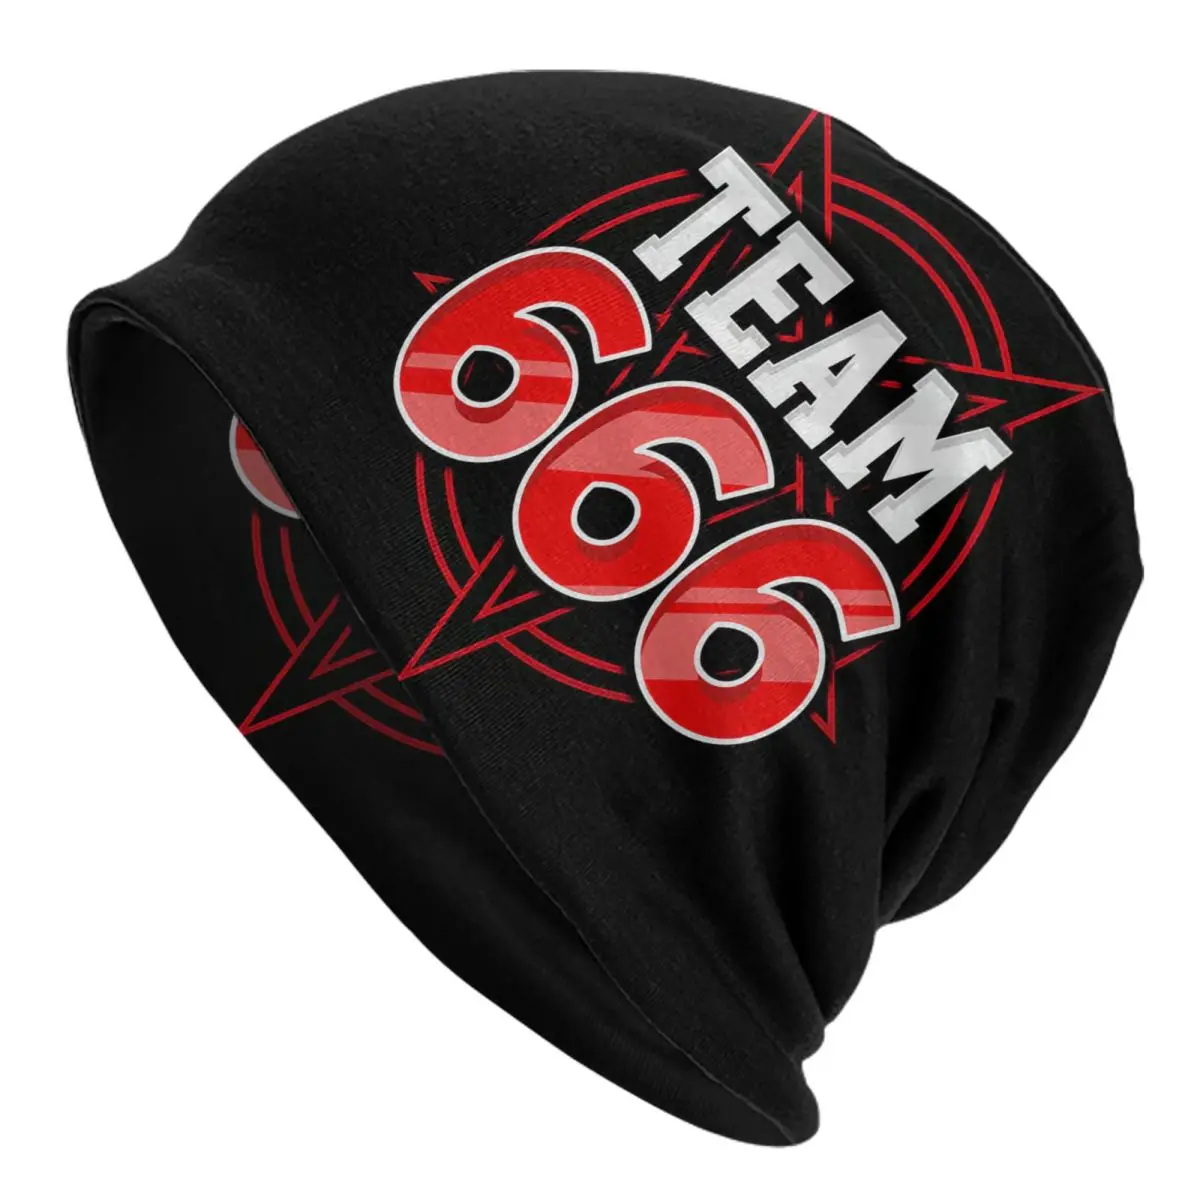 Team 666 I Satanic Pentagram I Black Death Metal Graphic Adult Men's Women's Knit Hat Keep warm winter Funny knitted hat